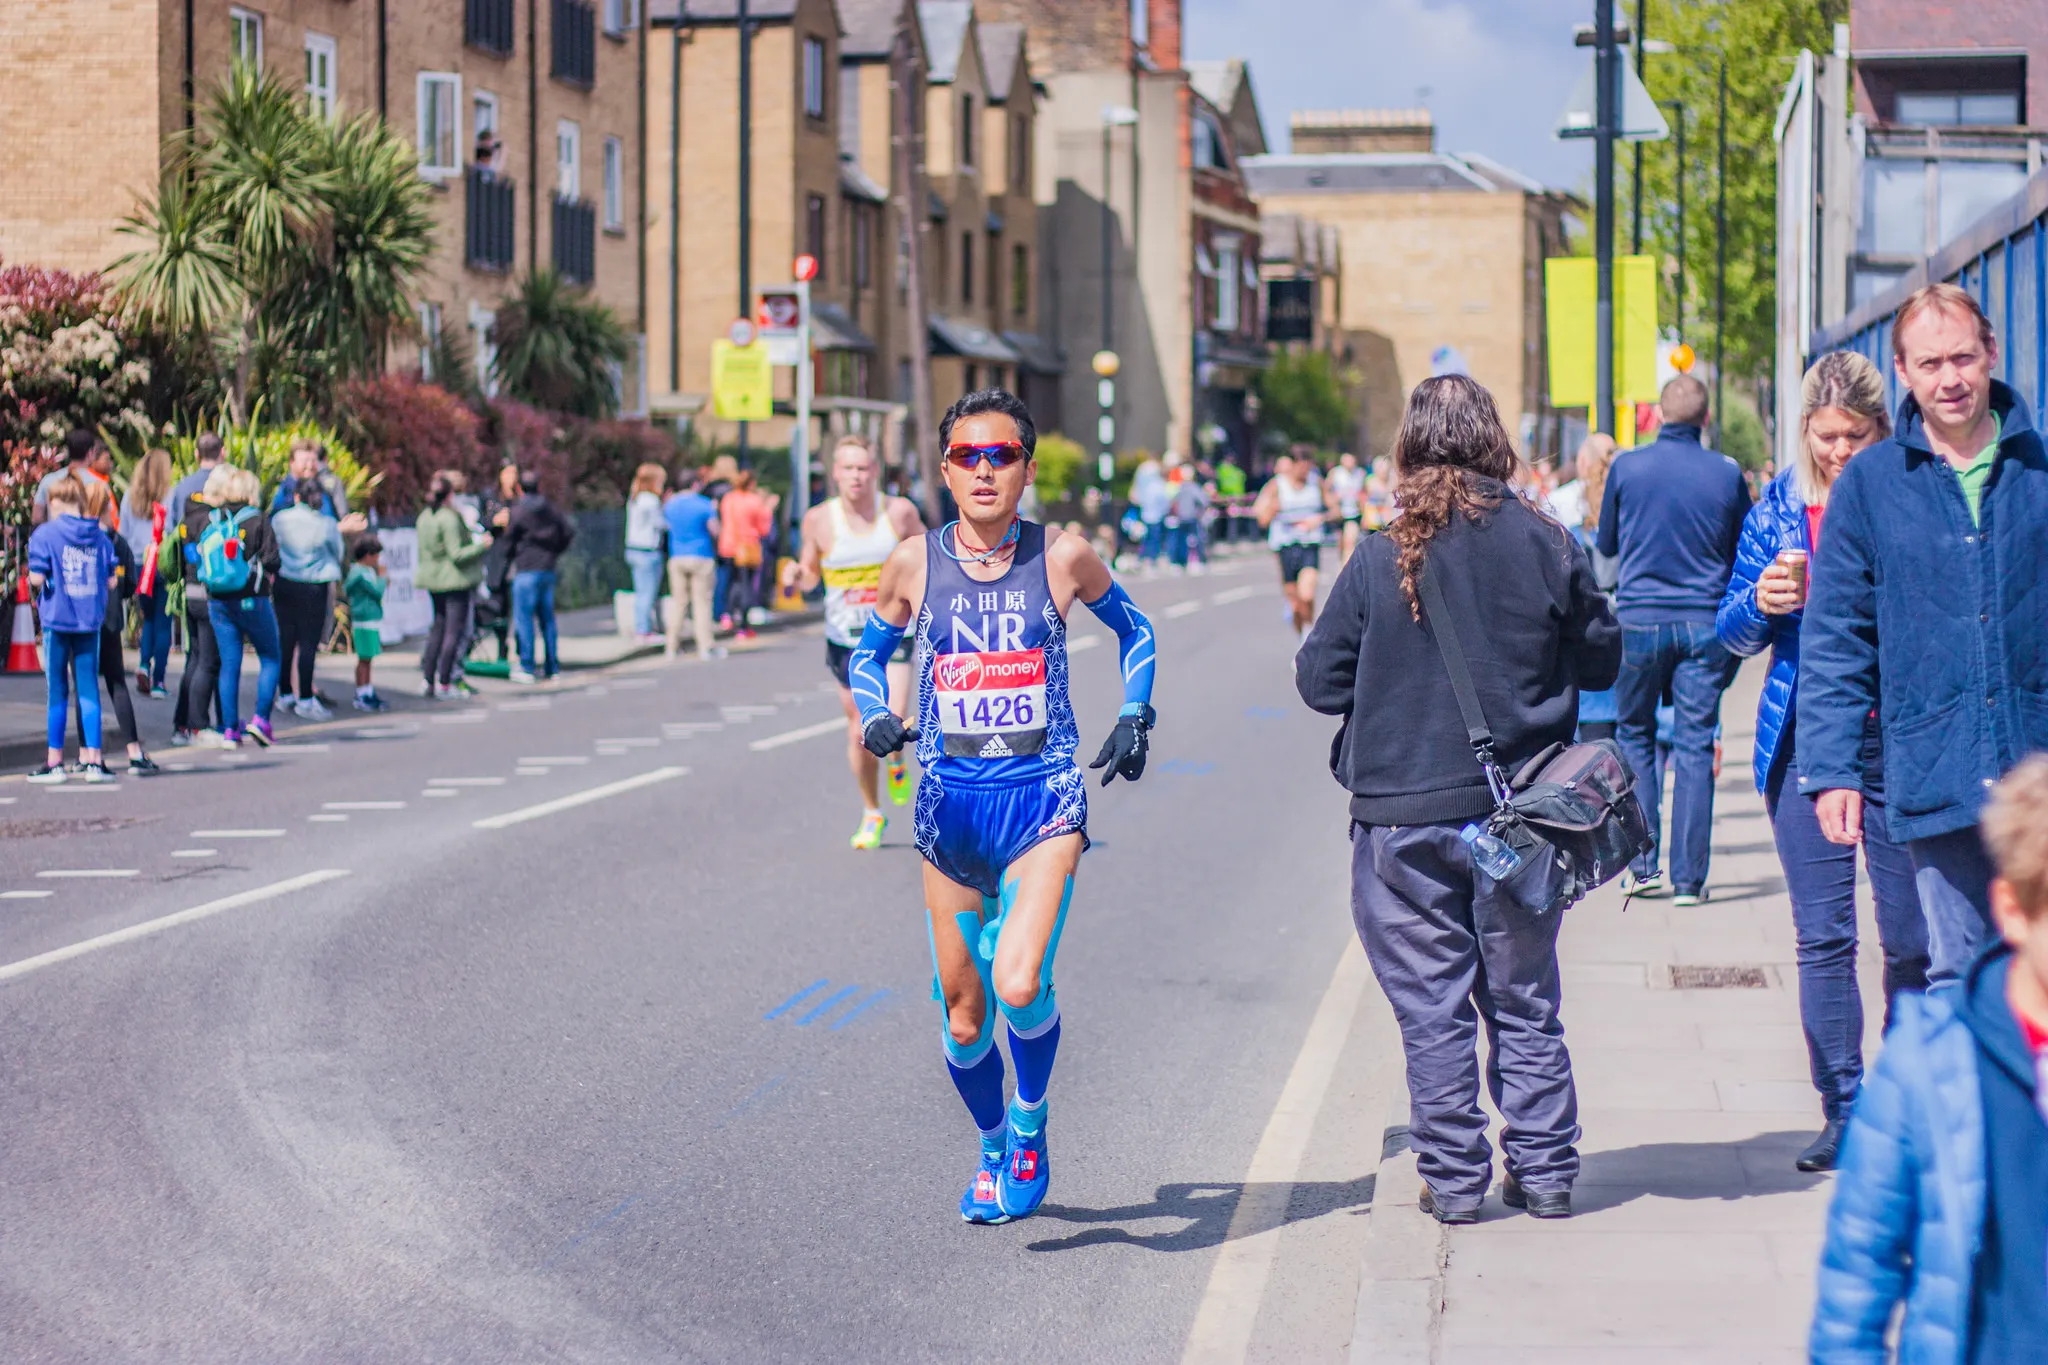 Runner #1426, 2017 London Marathon